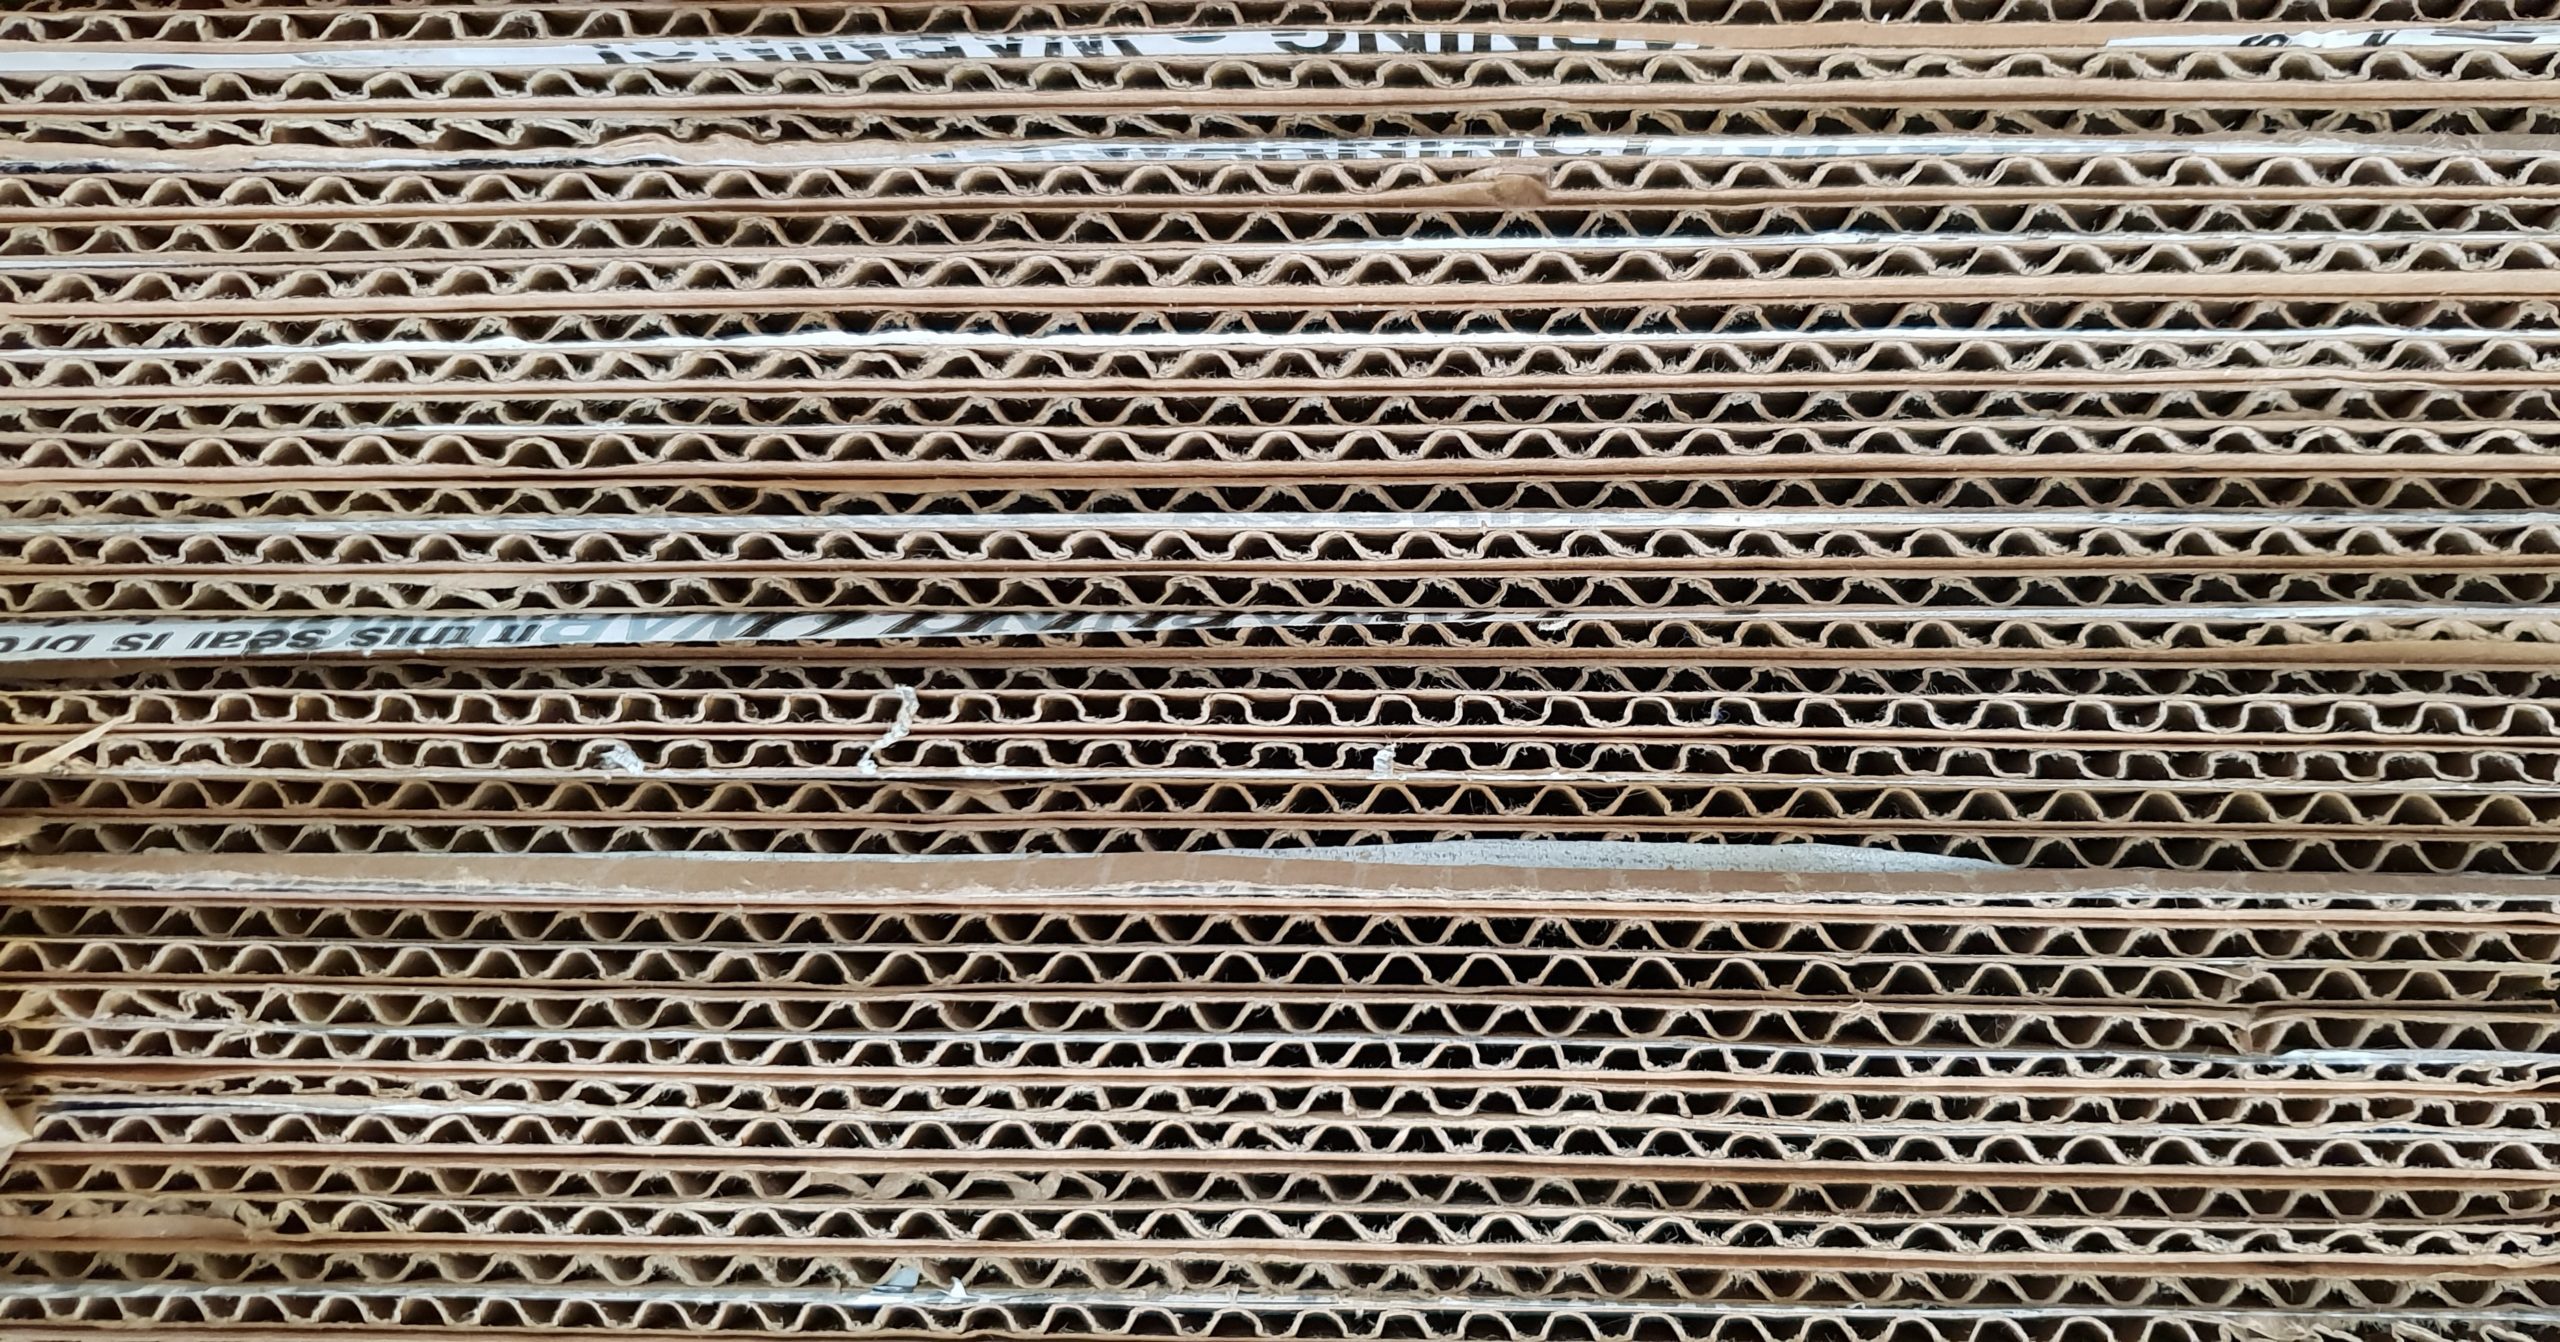 corrugate cardboard side view